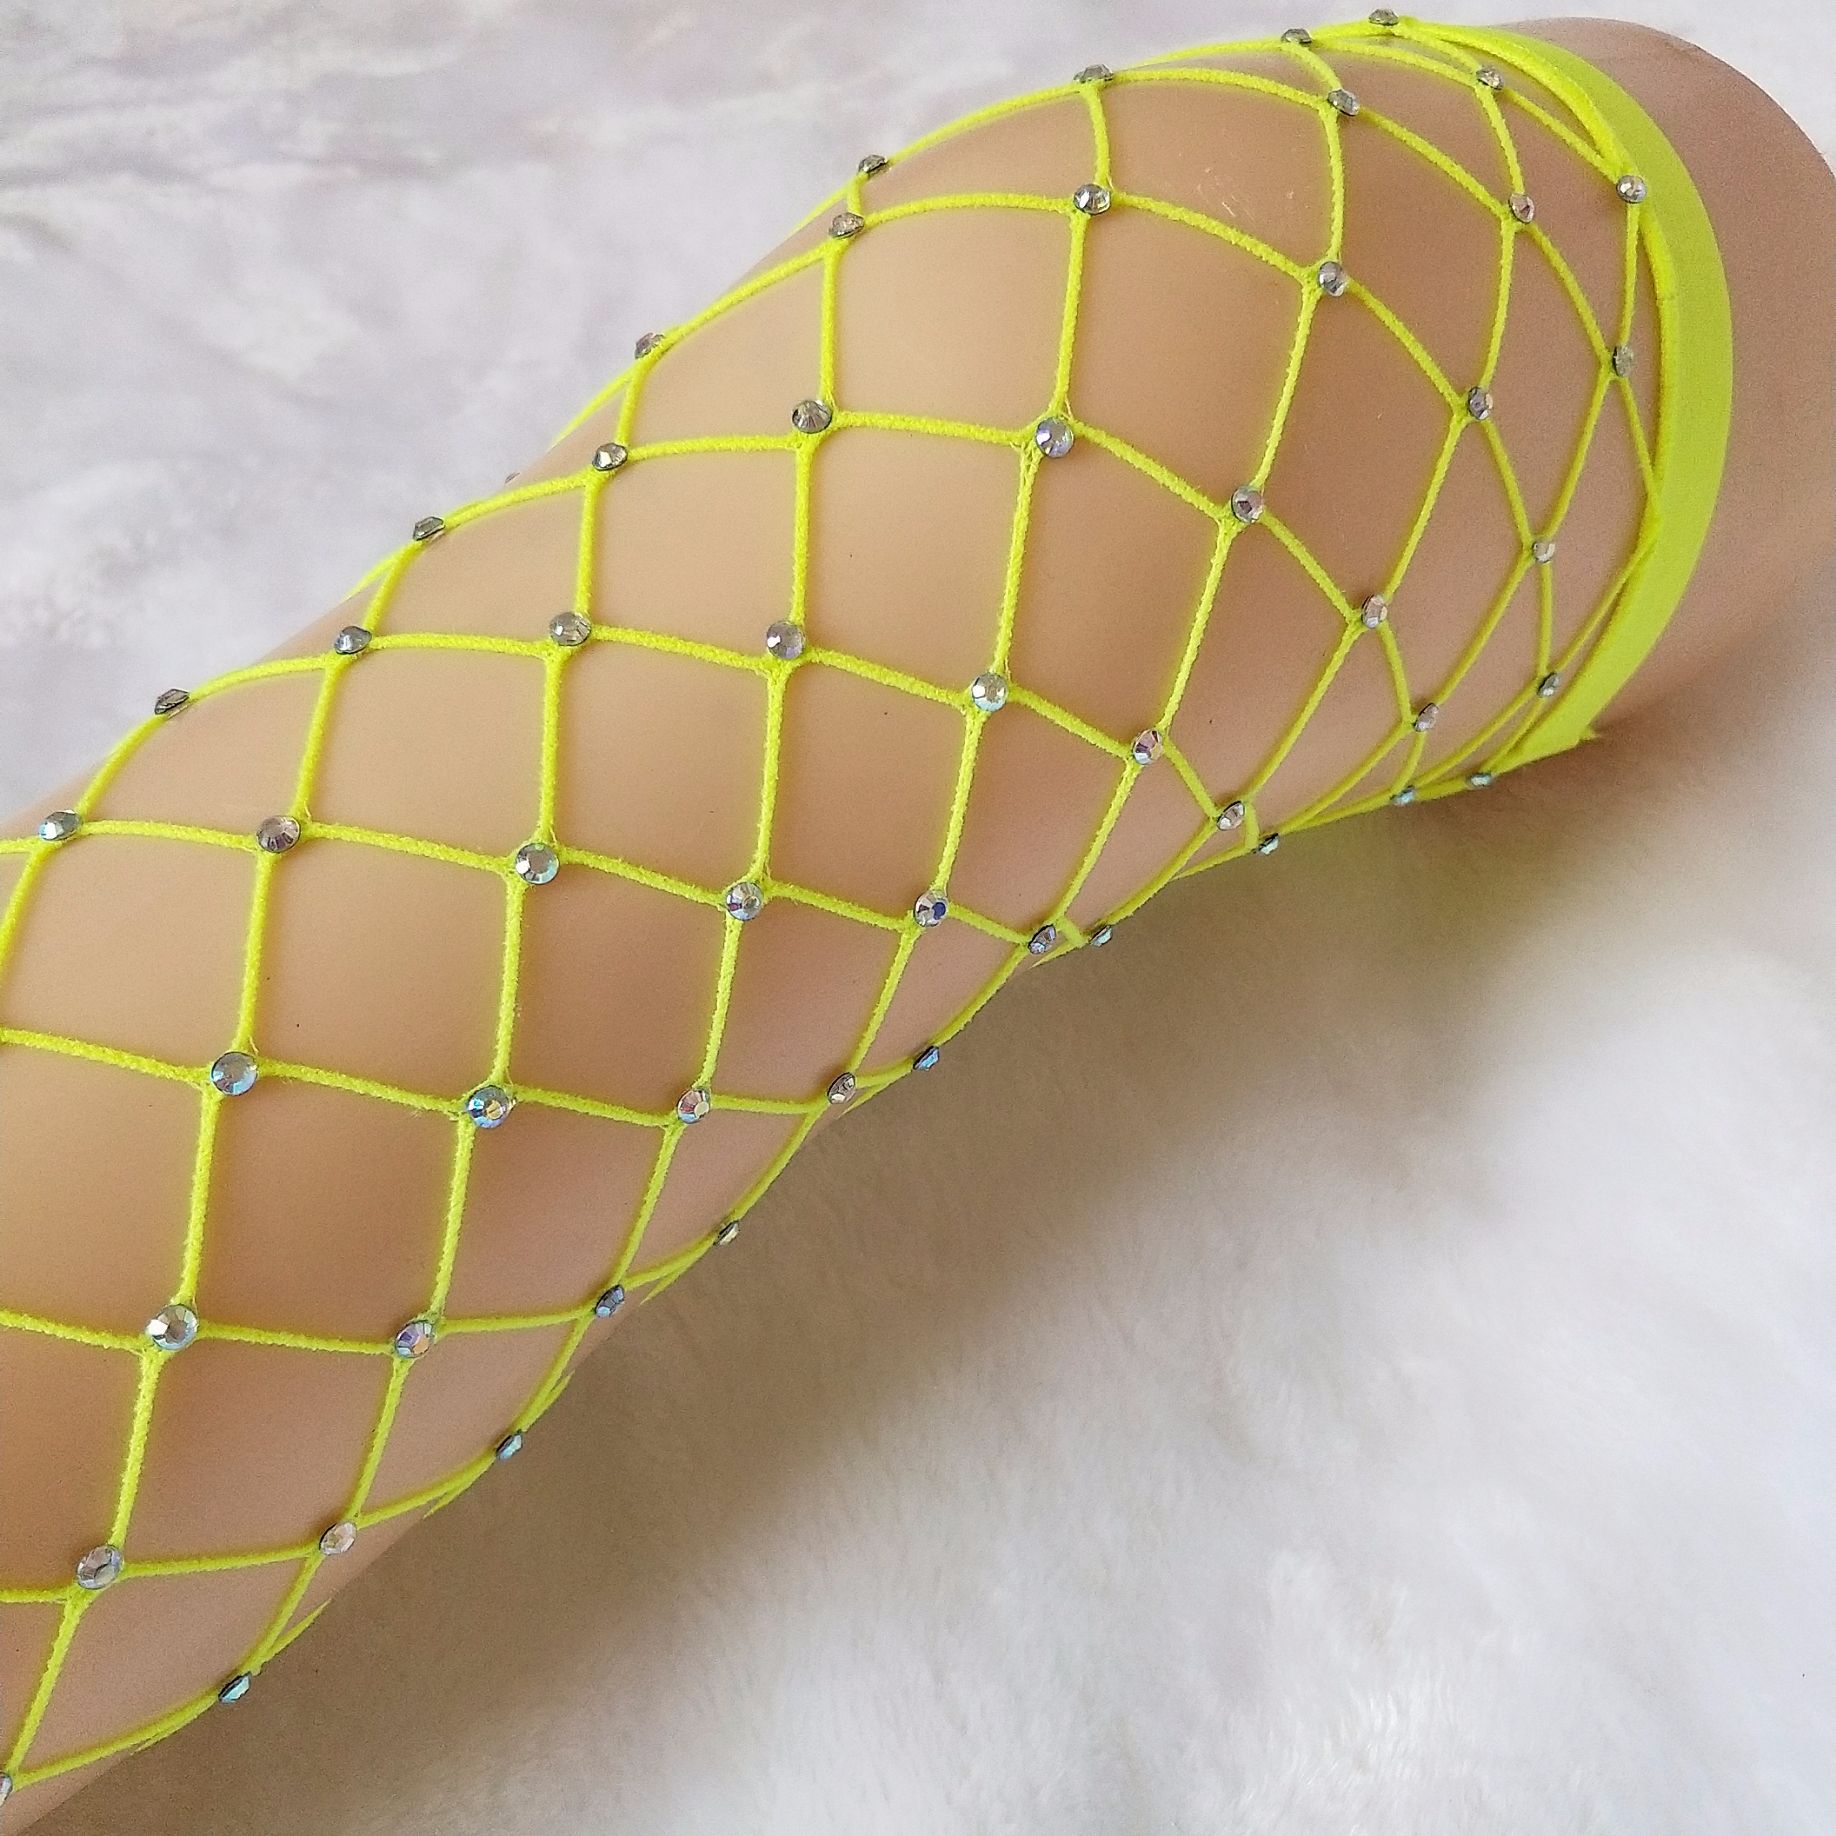 Rhinestone Radiance: Fishnet Stockings to Highlight Your Legs